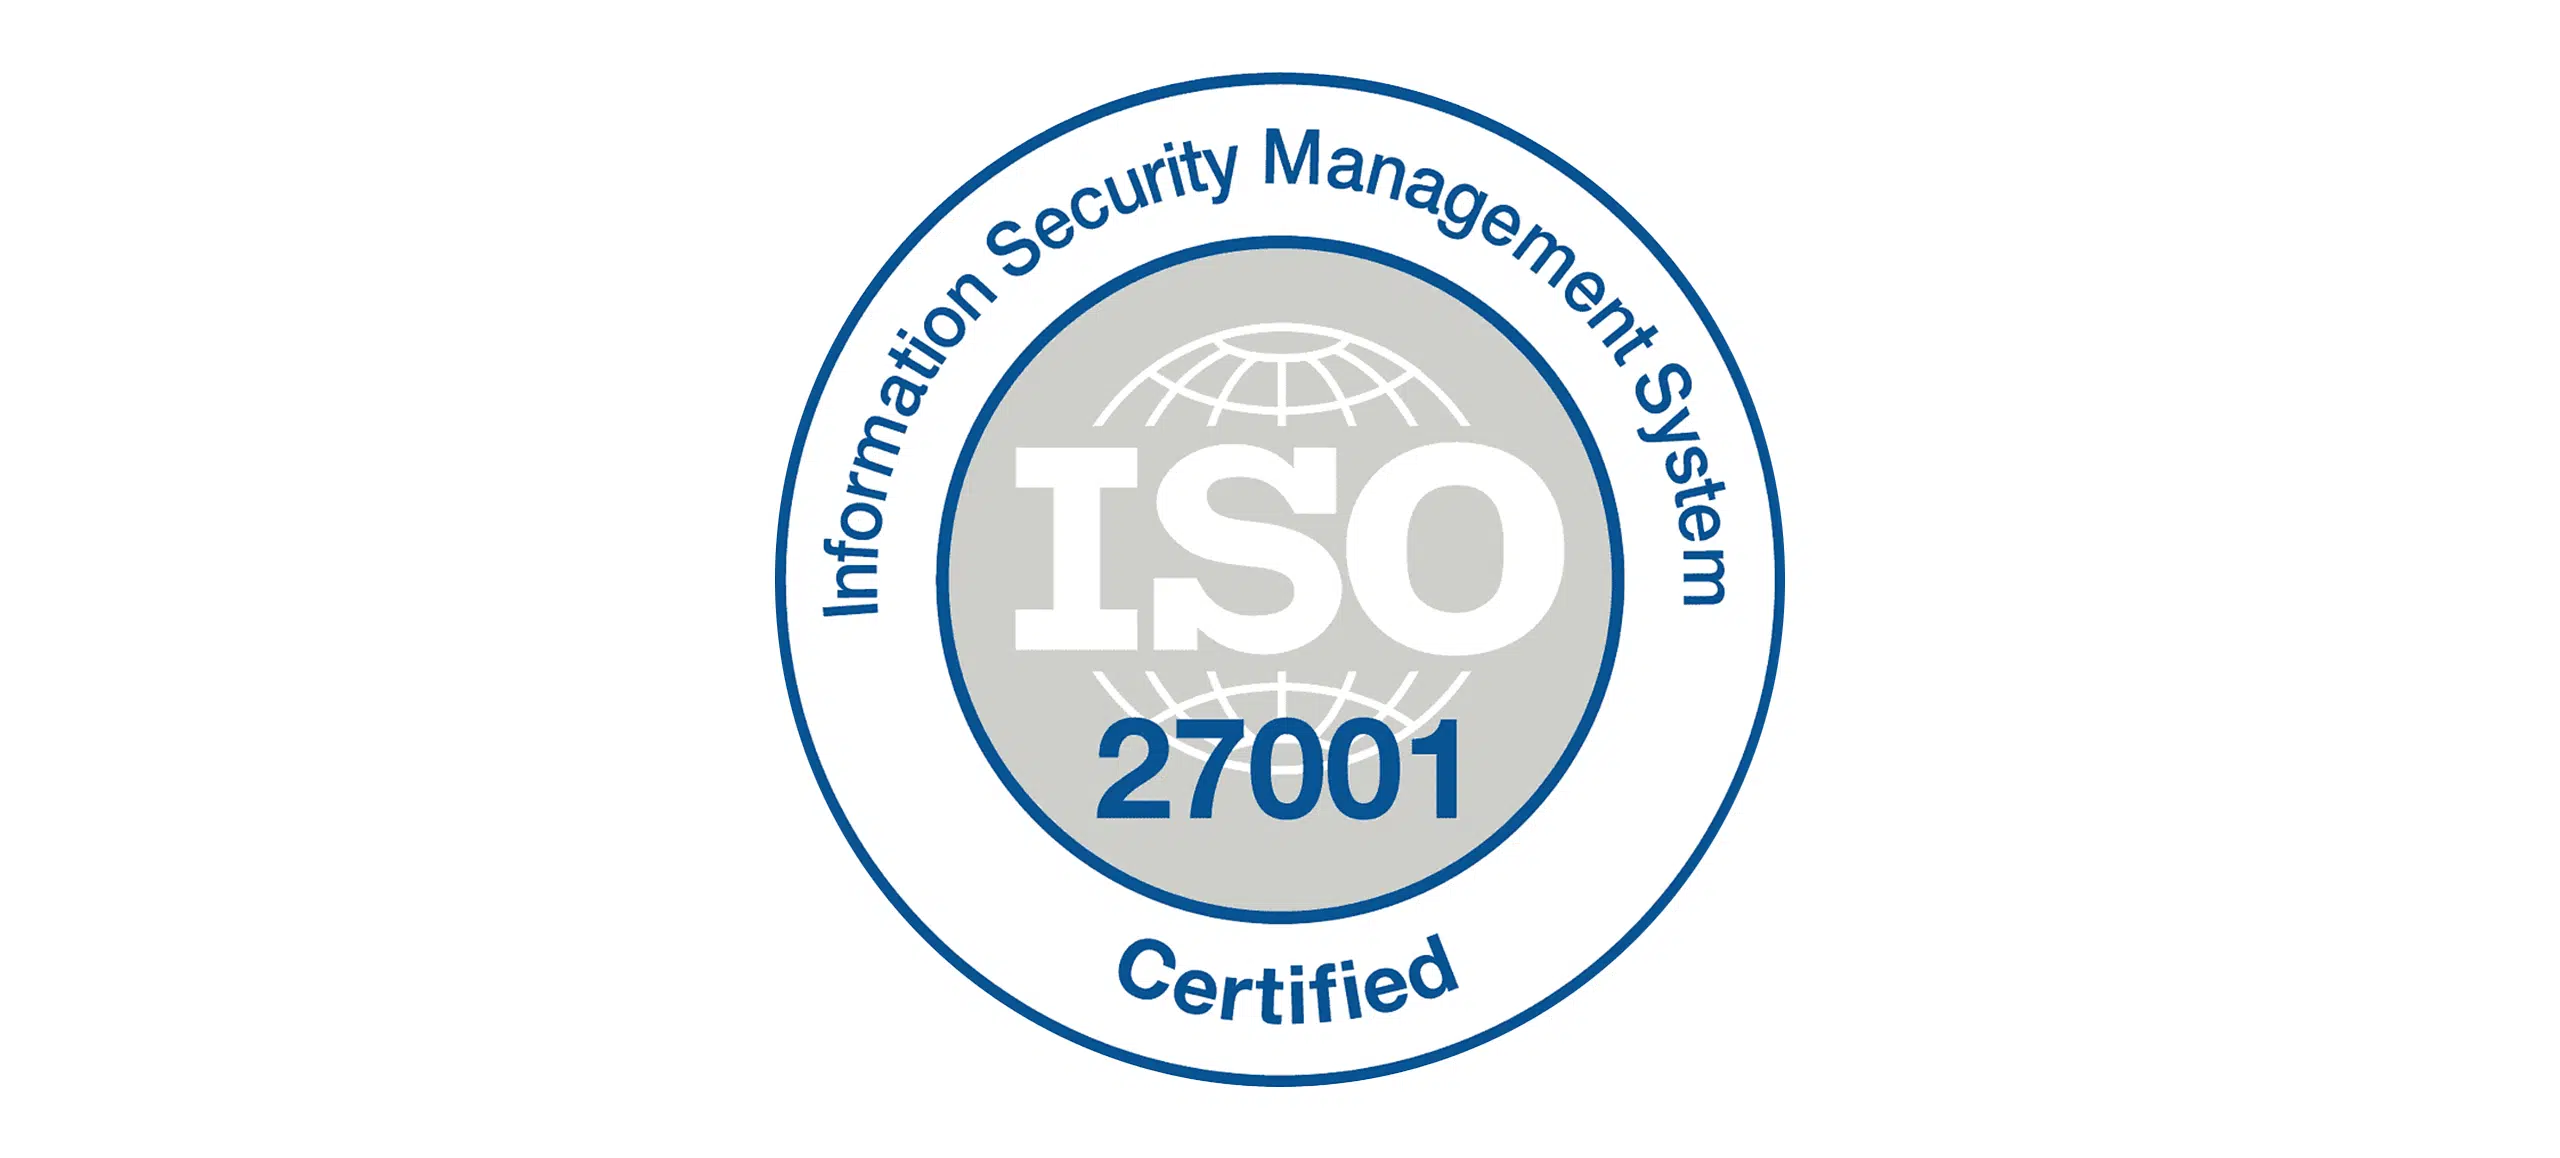 cloudnexa achieves iso/iec 27001 certification